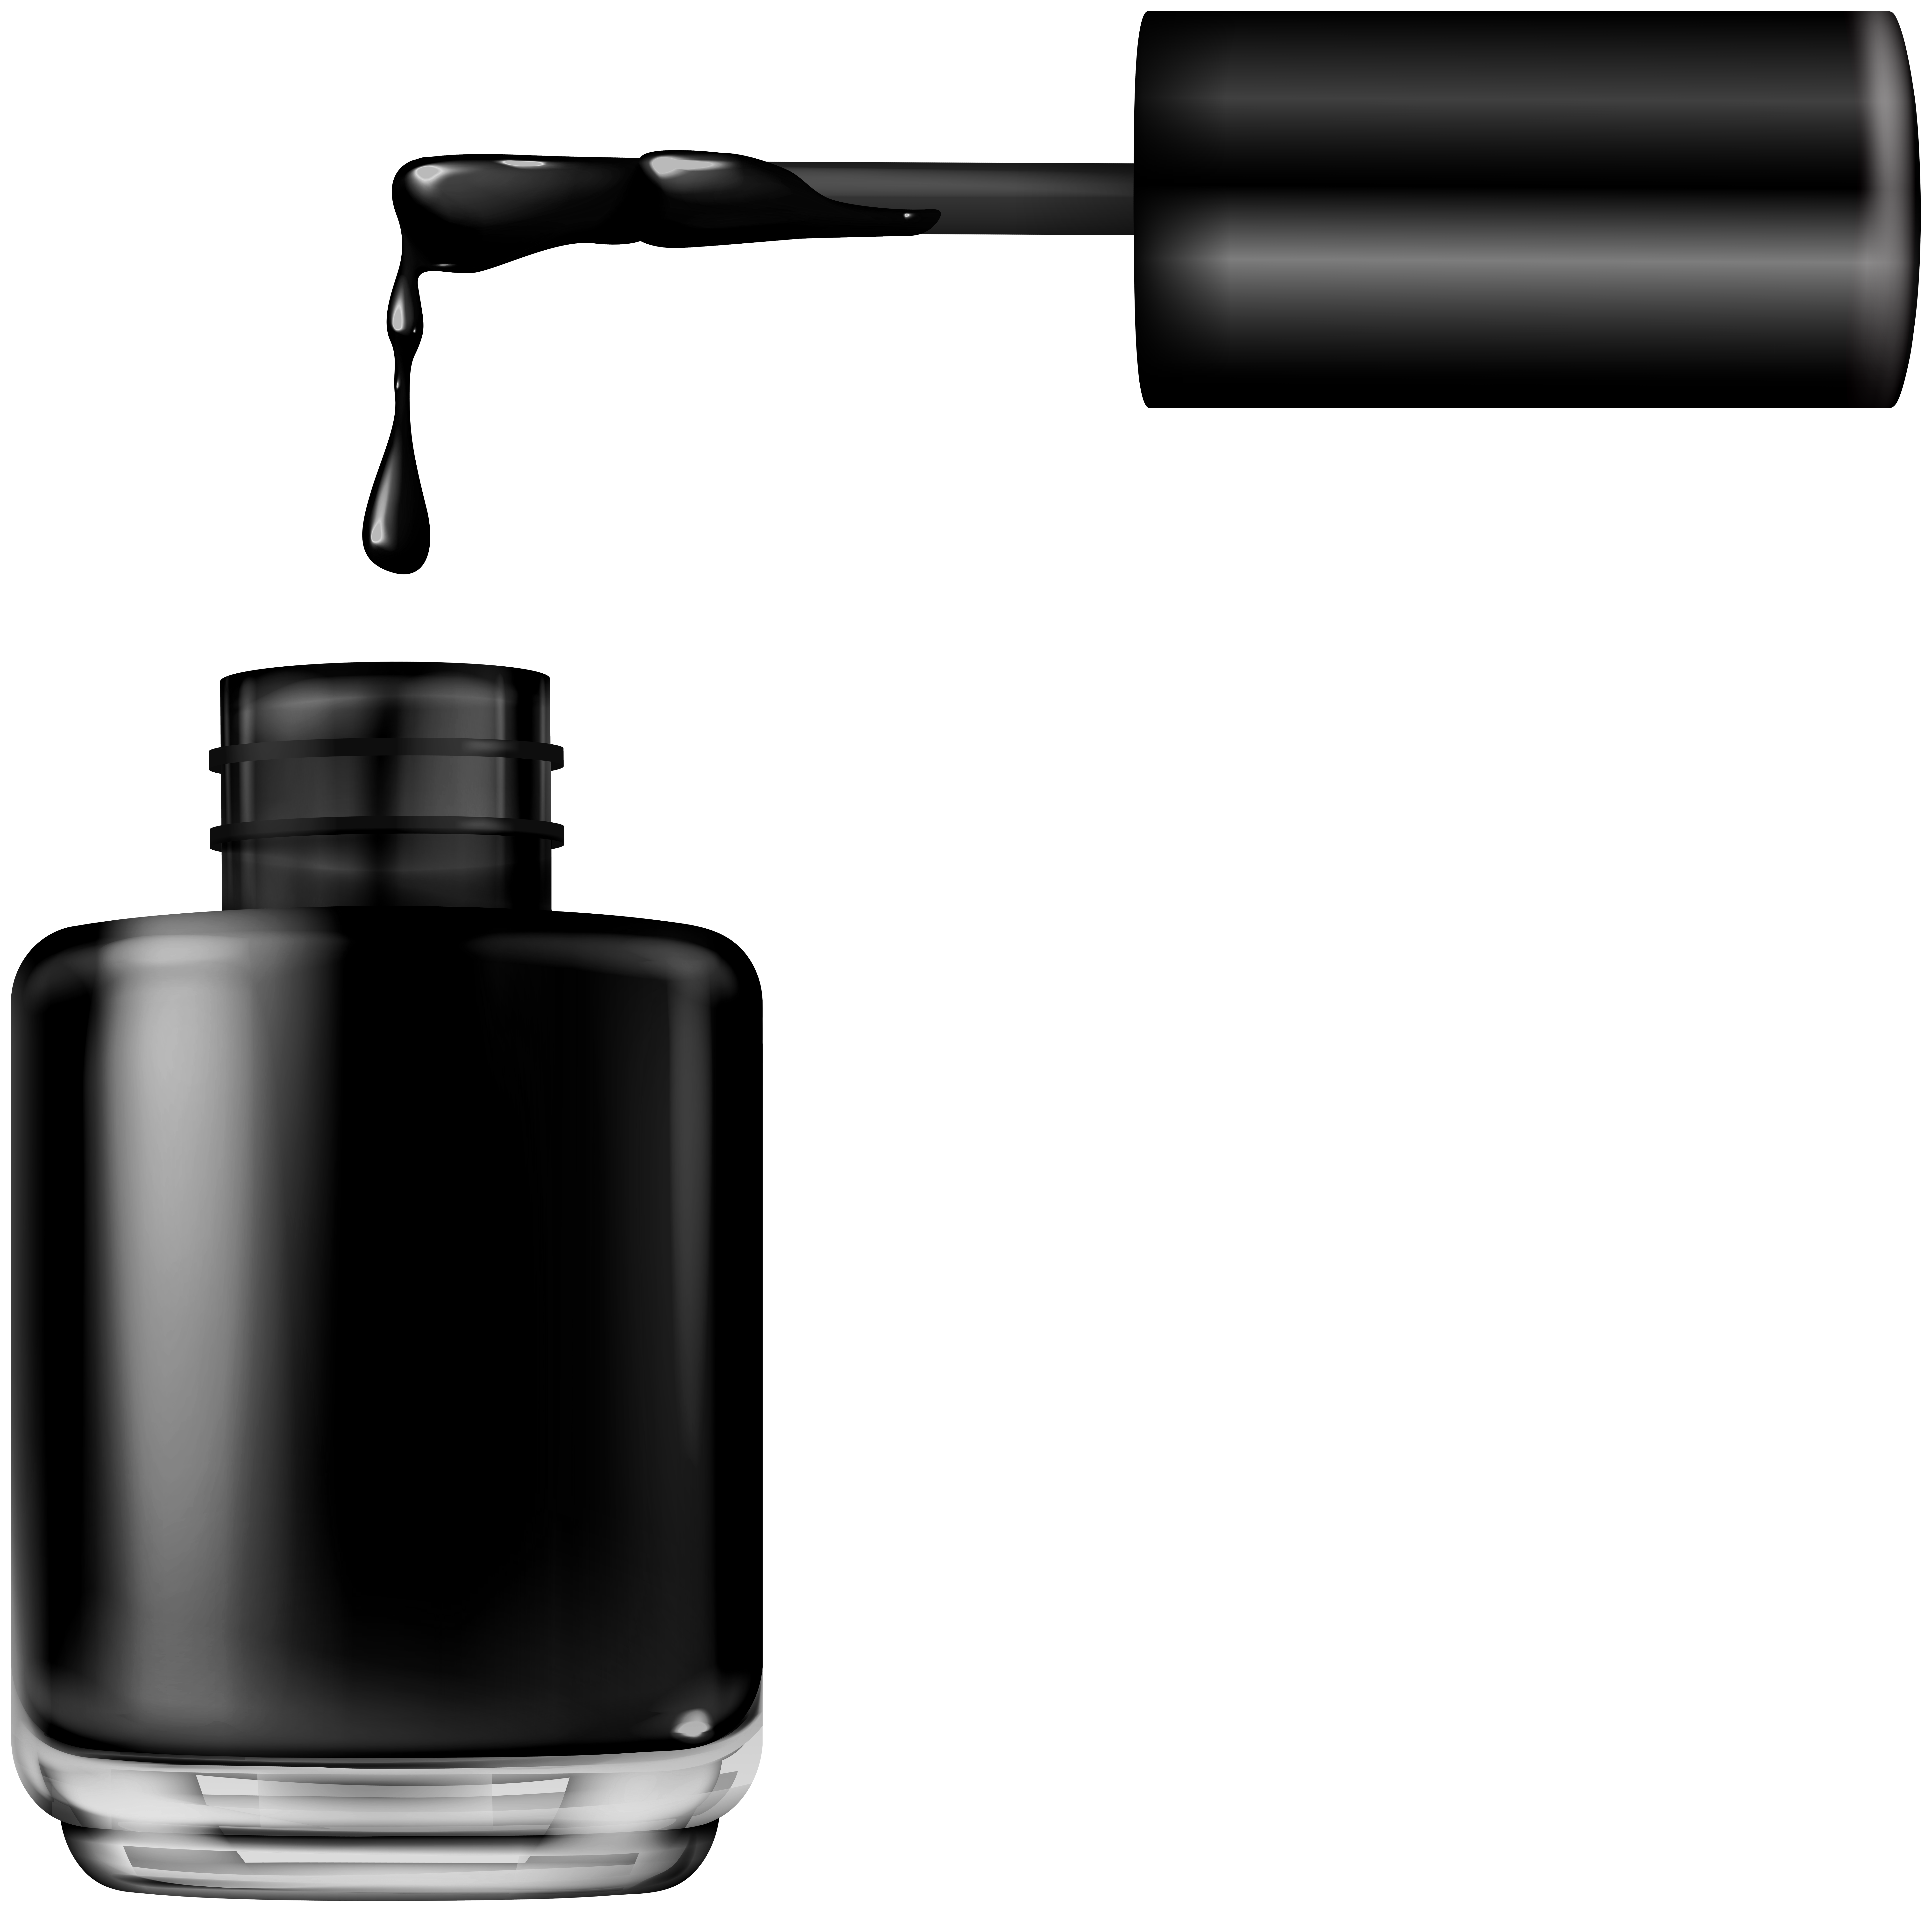 nail polish clip art black and white